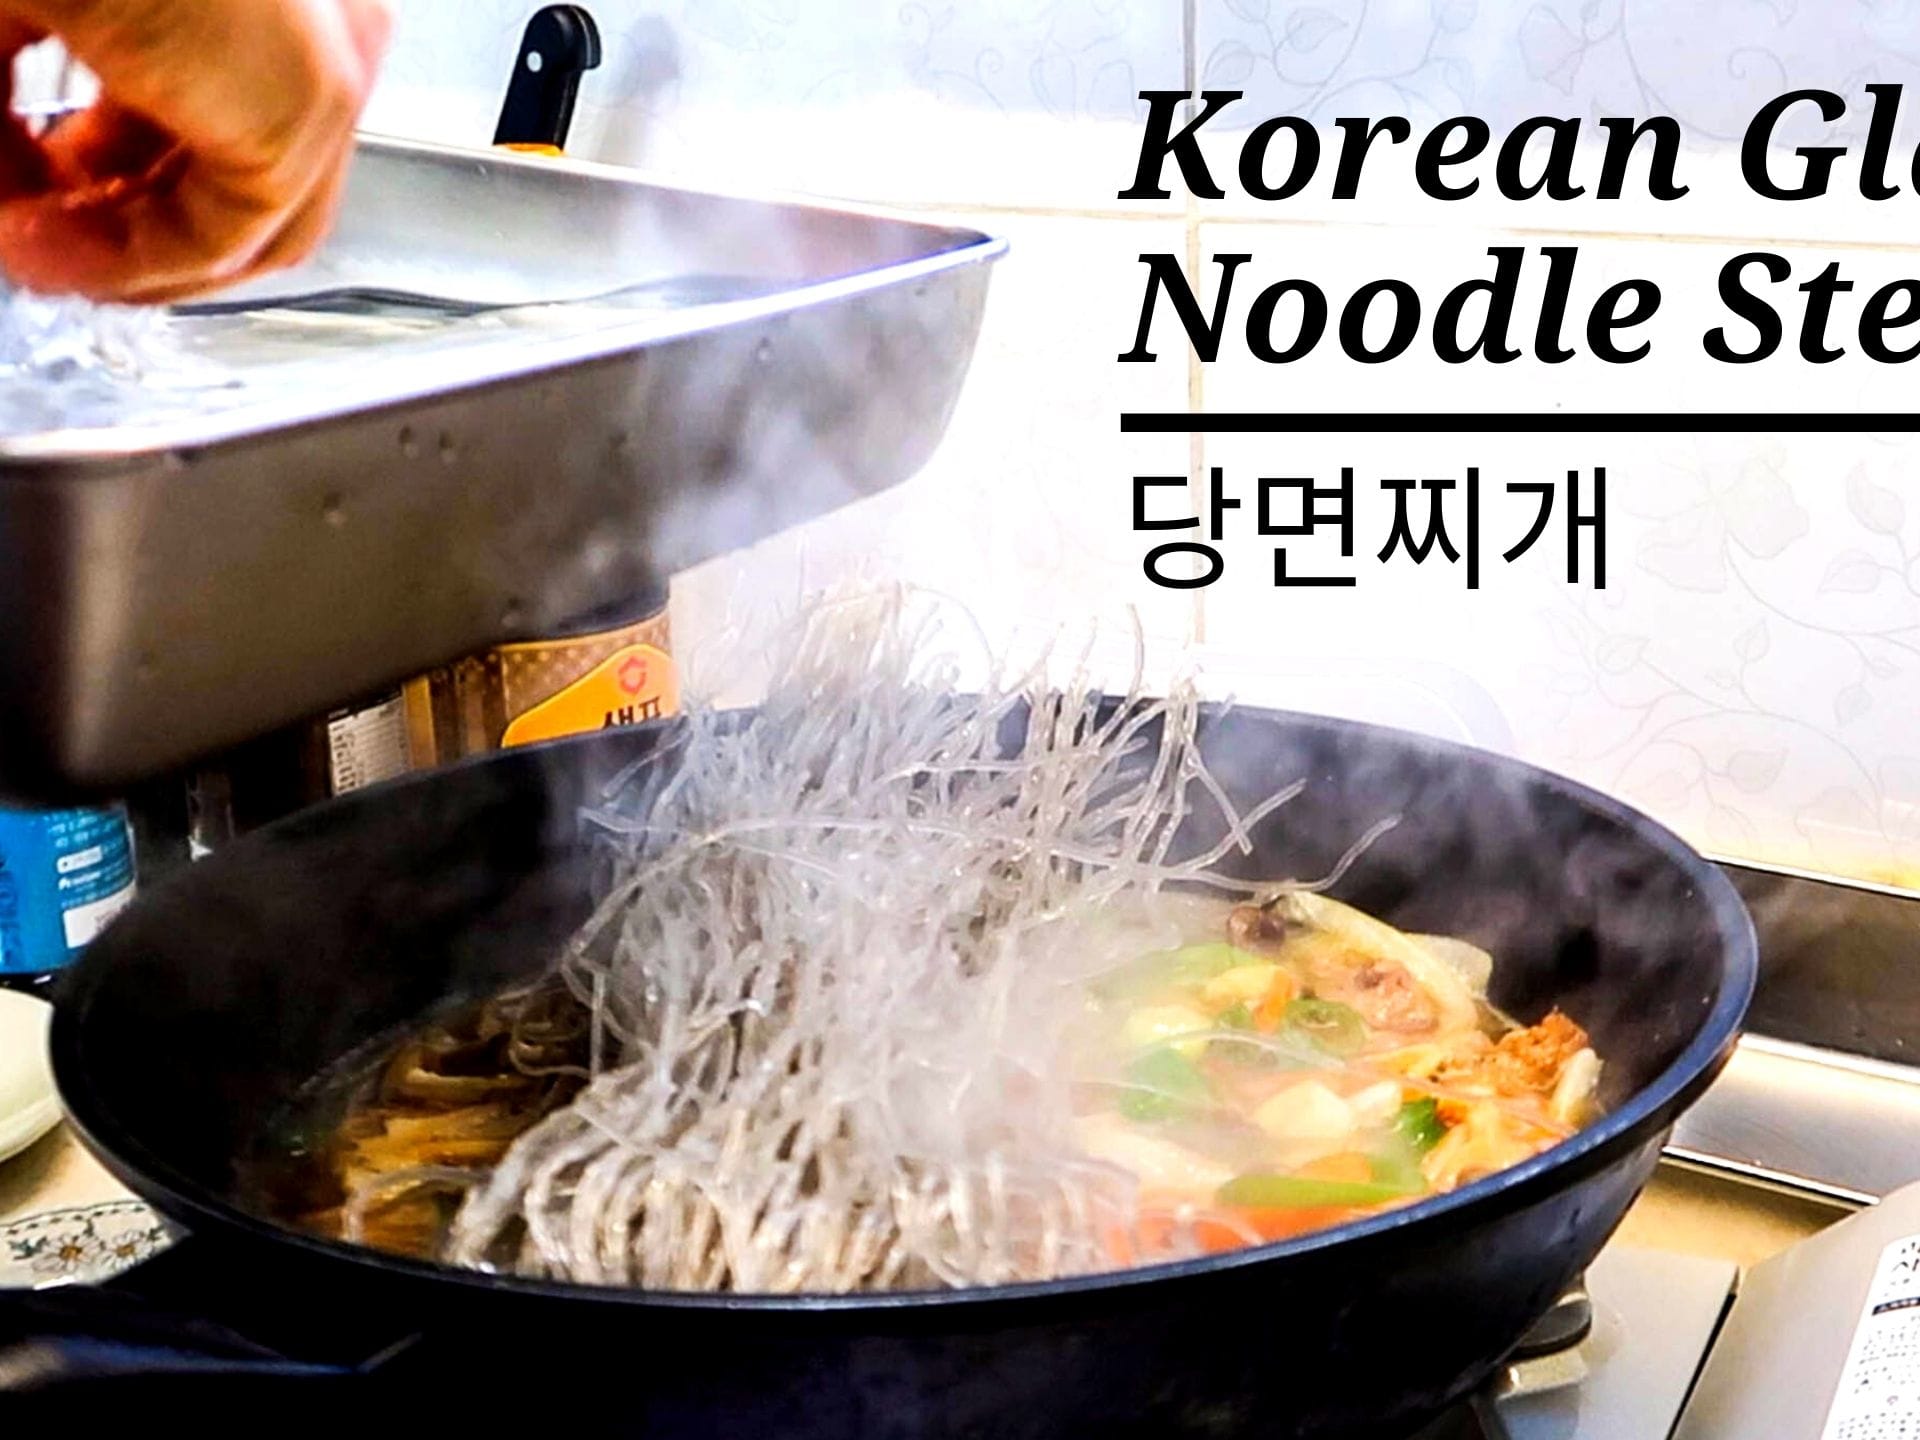 Korean Glass Noodle Stew - Dangmyeon Stew! – FutureDish